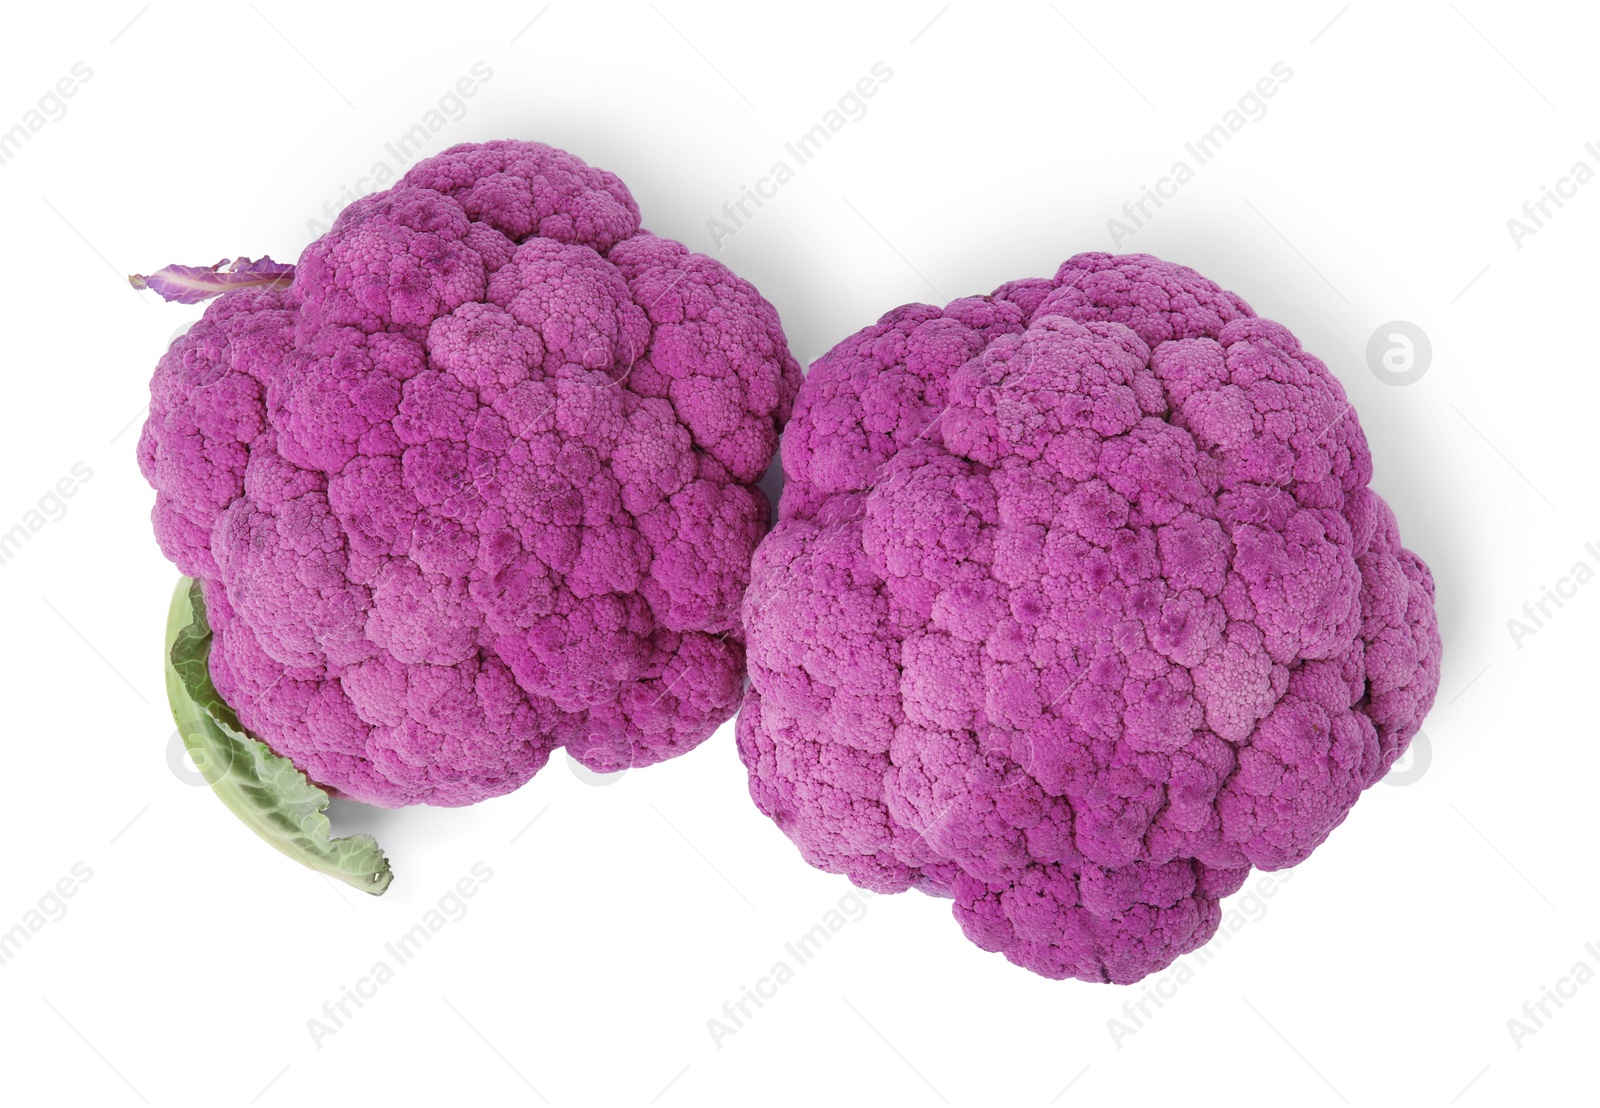 Photo of Fresh purple cauliflowers on white background, top view